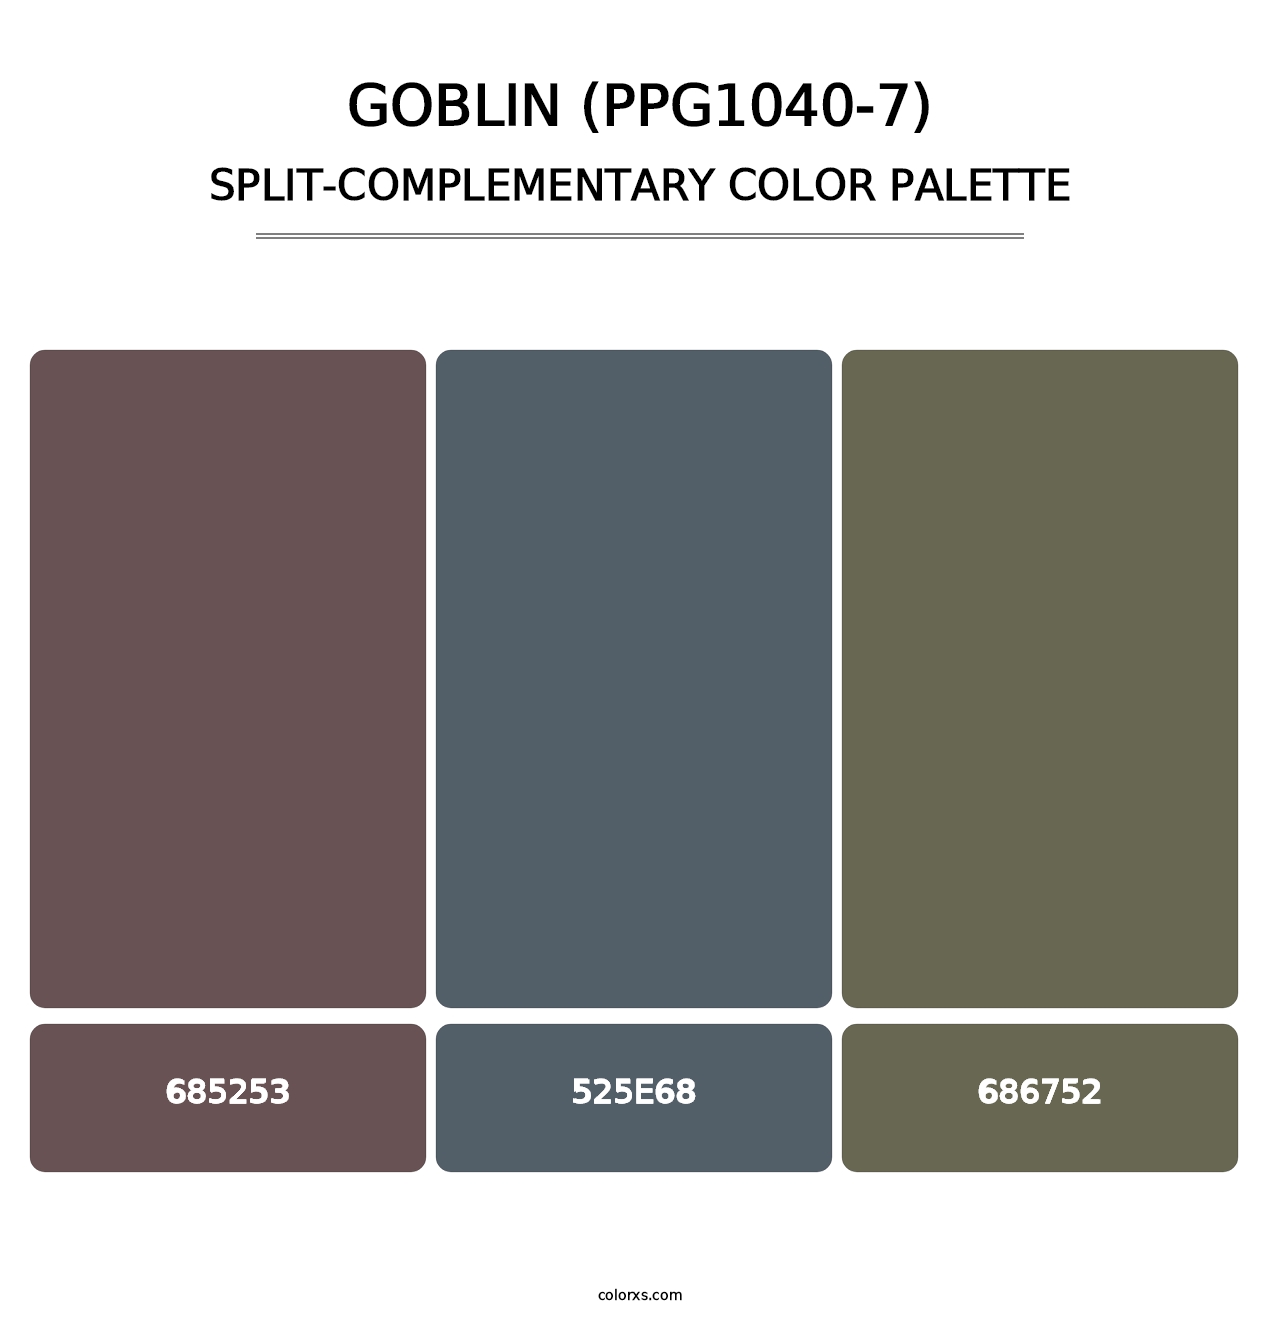 Goblin (PPG1040-7) - Split-Complementary Color Palette